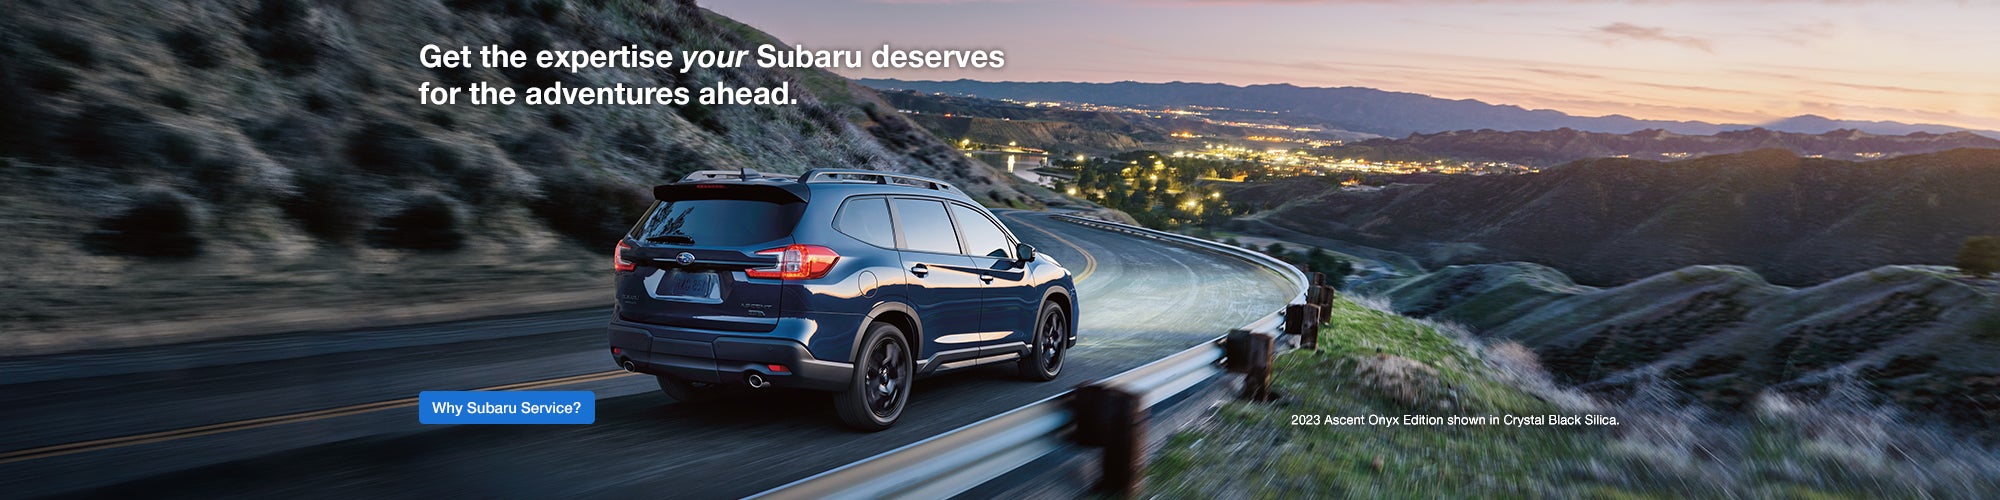 Why Subaru Service?